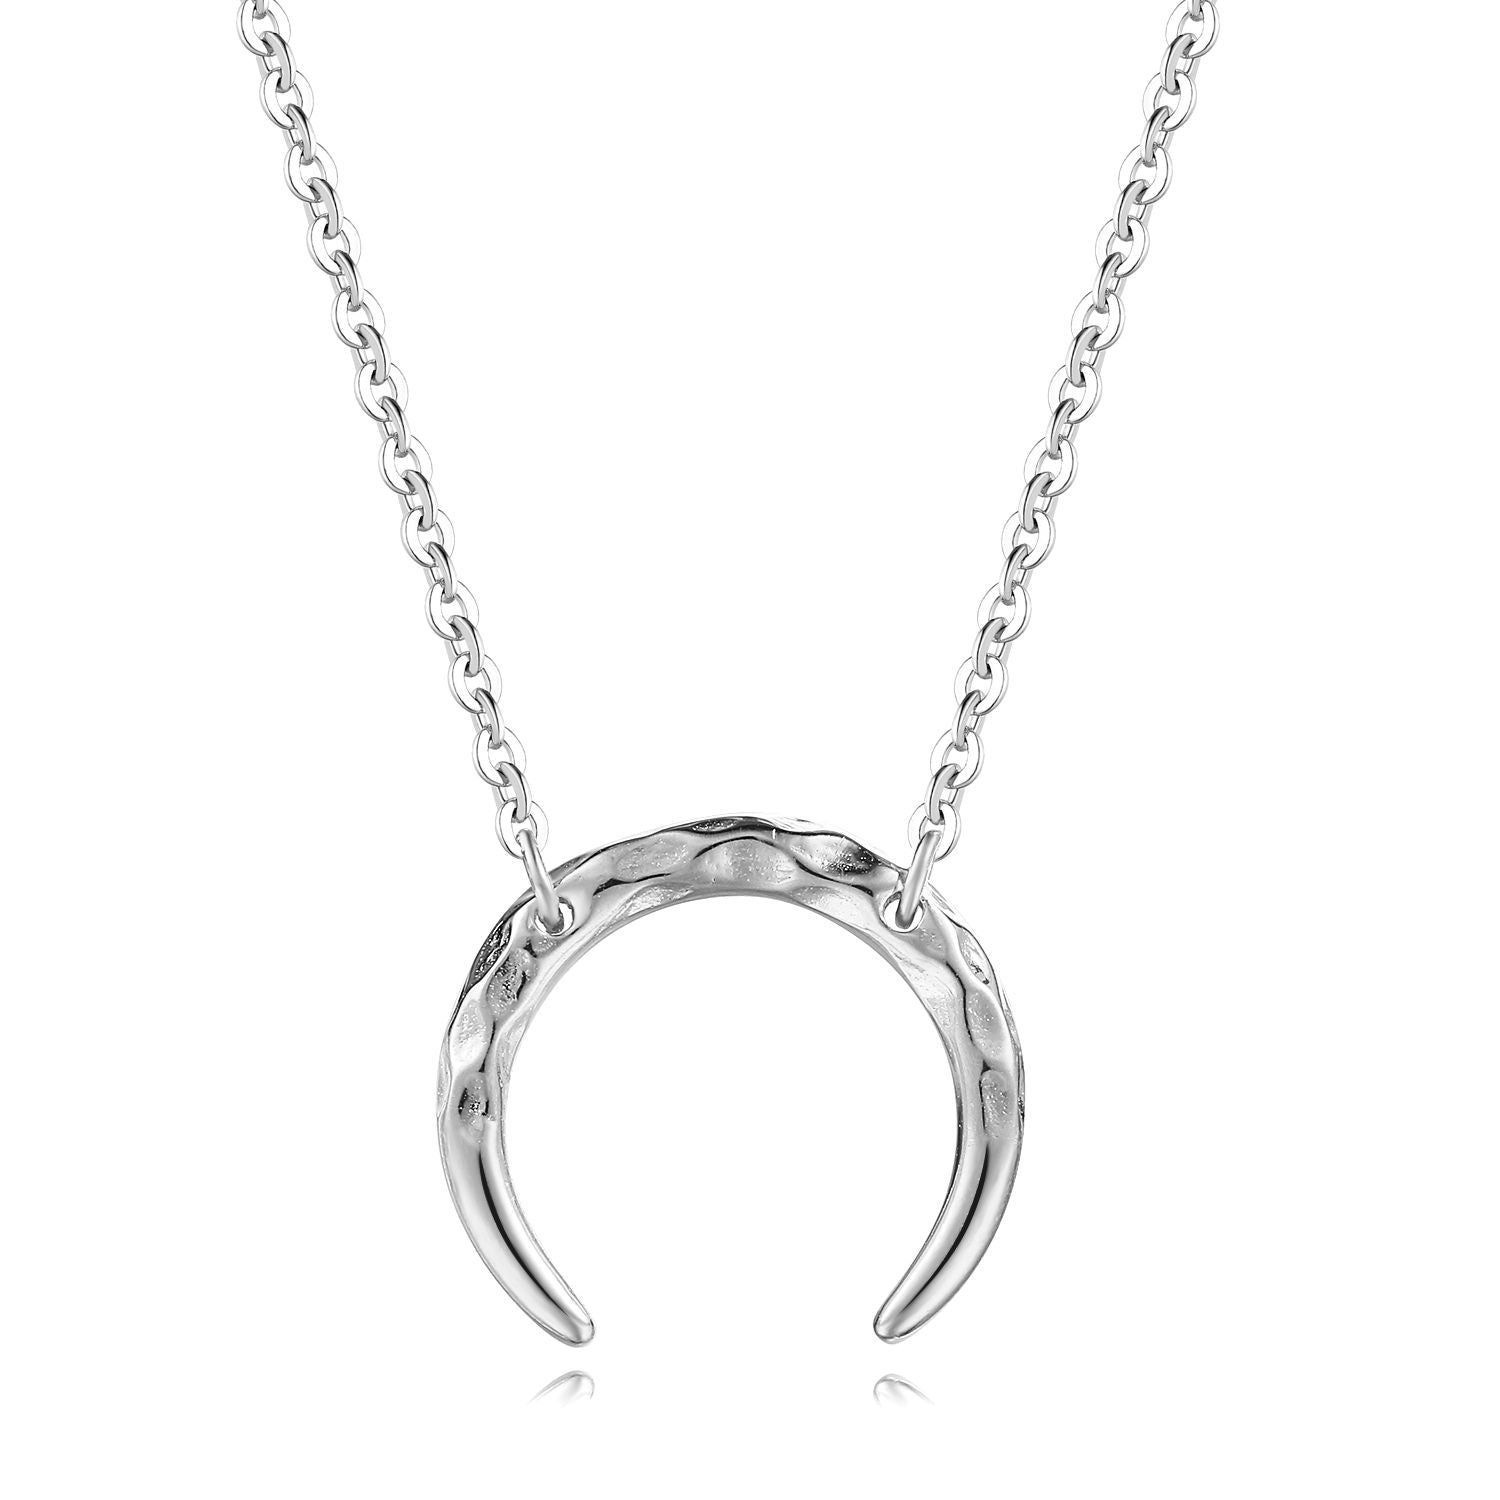 Simple Hammered crescent phase pendant necklaceAccessoriesCJZBLXLX18410-Platinum